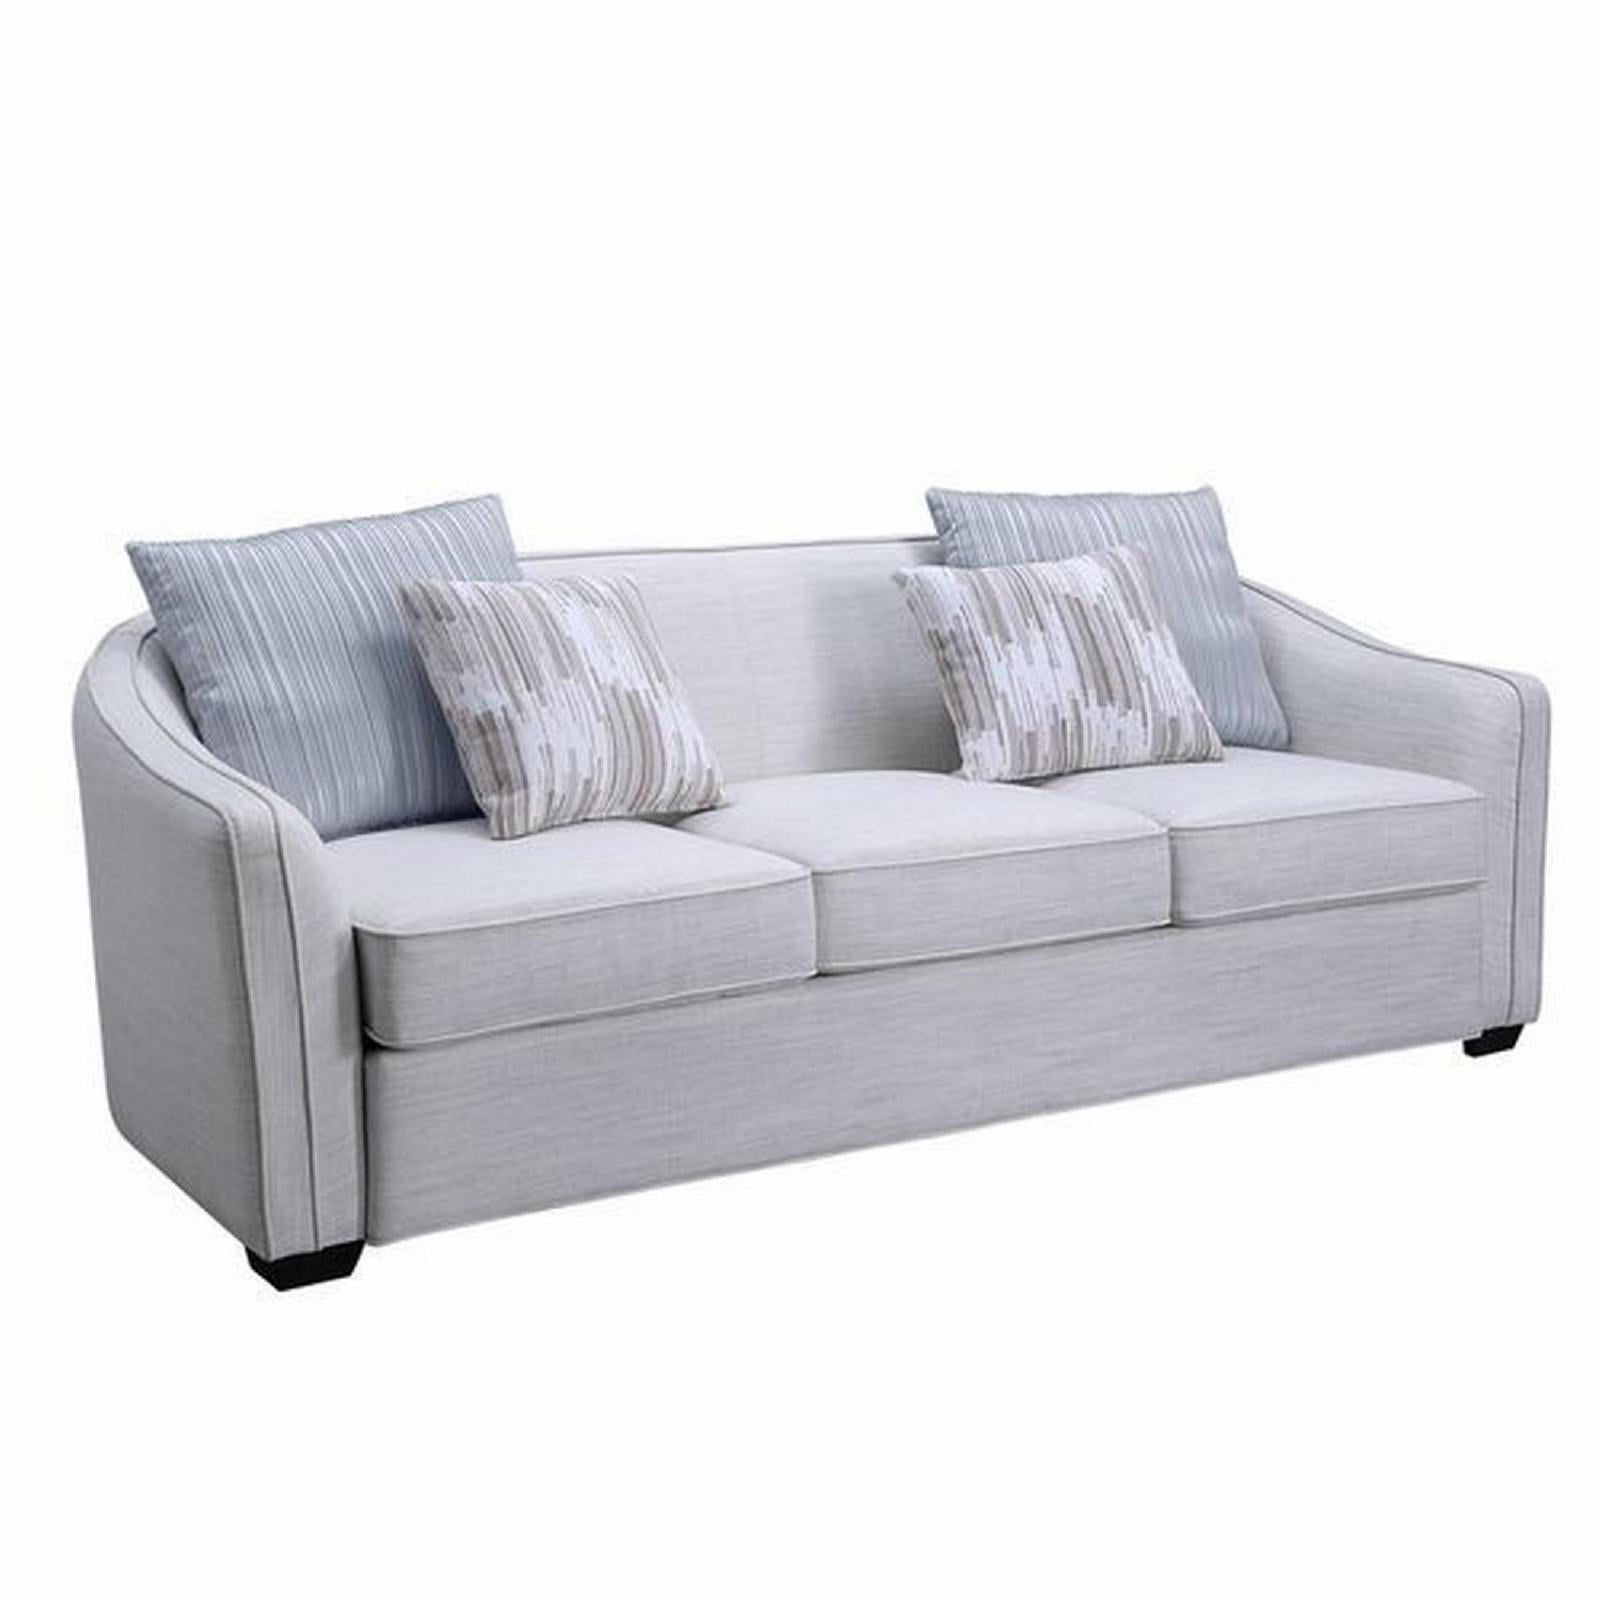 BM269547 Sofa with Fabric Upholstery & Sloped Arms, Gray -  Benjara